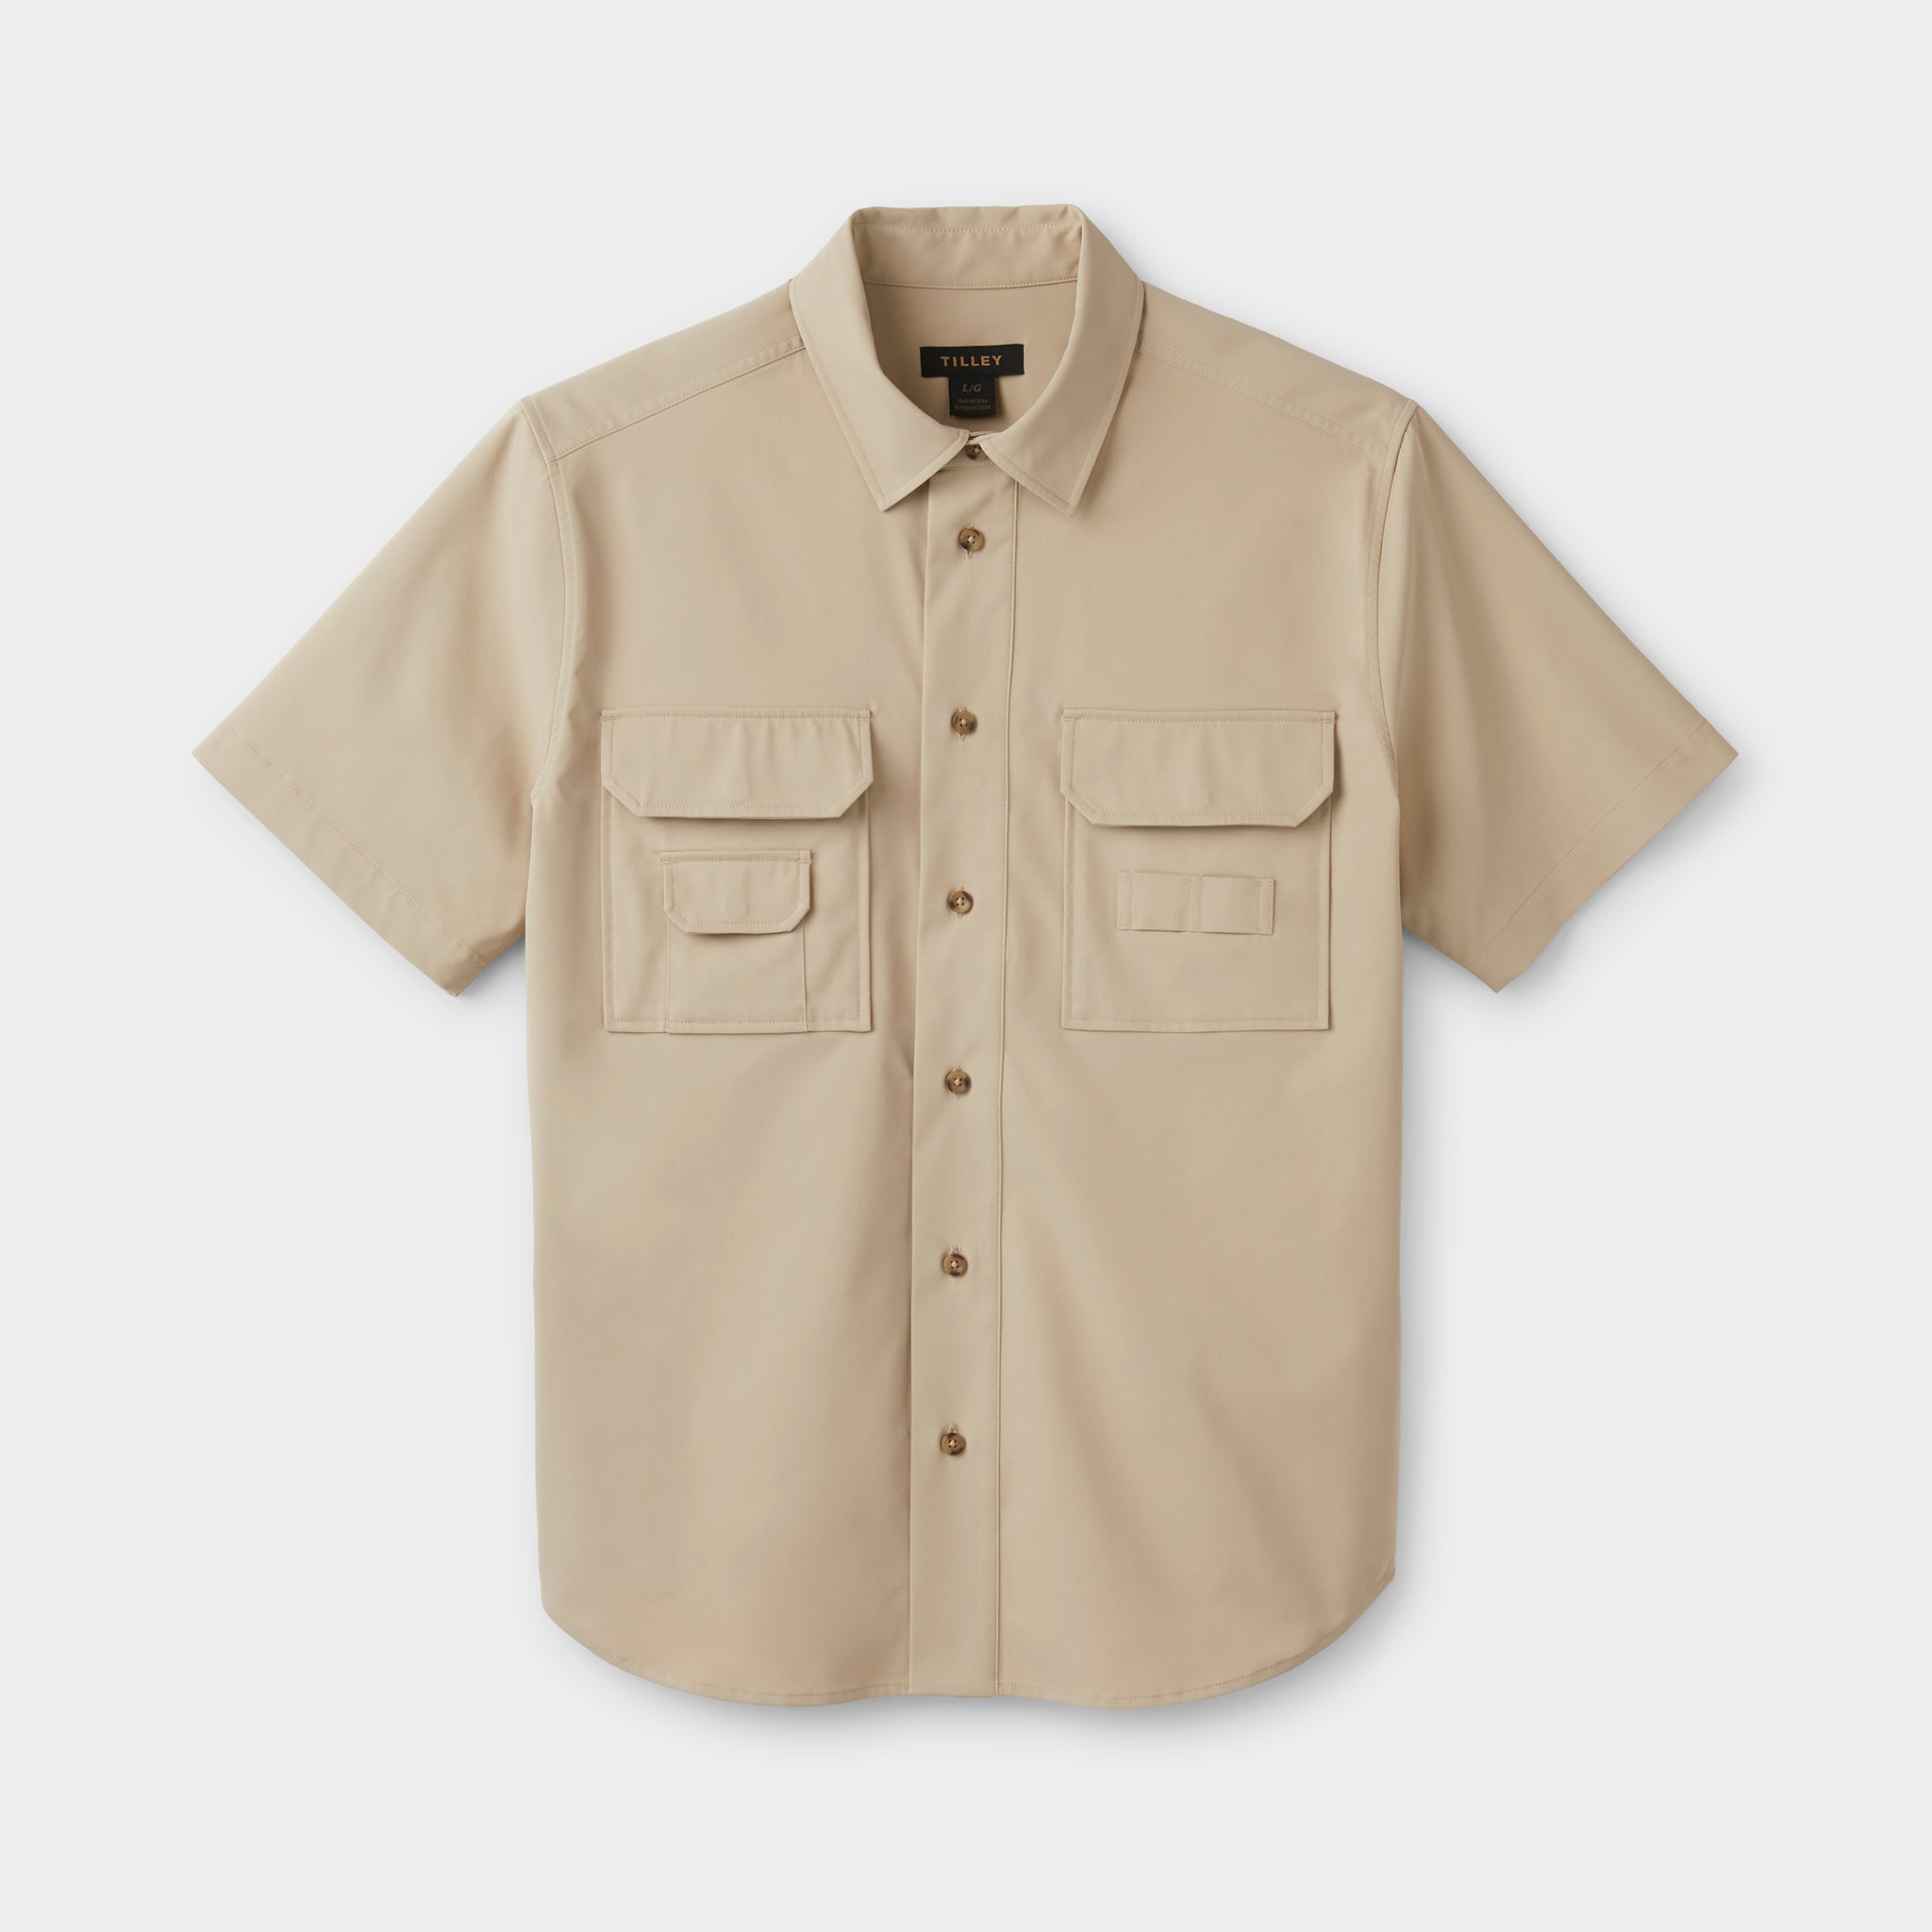 Vintage 80's 90's Khaki Tilley Endurables Button down Safari Skirt SIz –  Prince Edward County T-Shirt Company